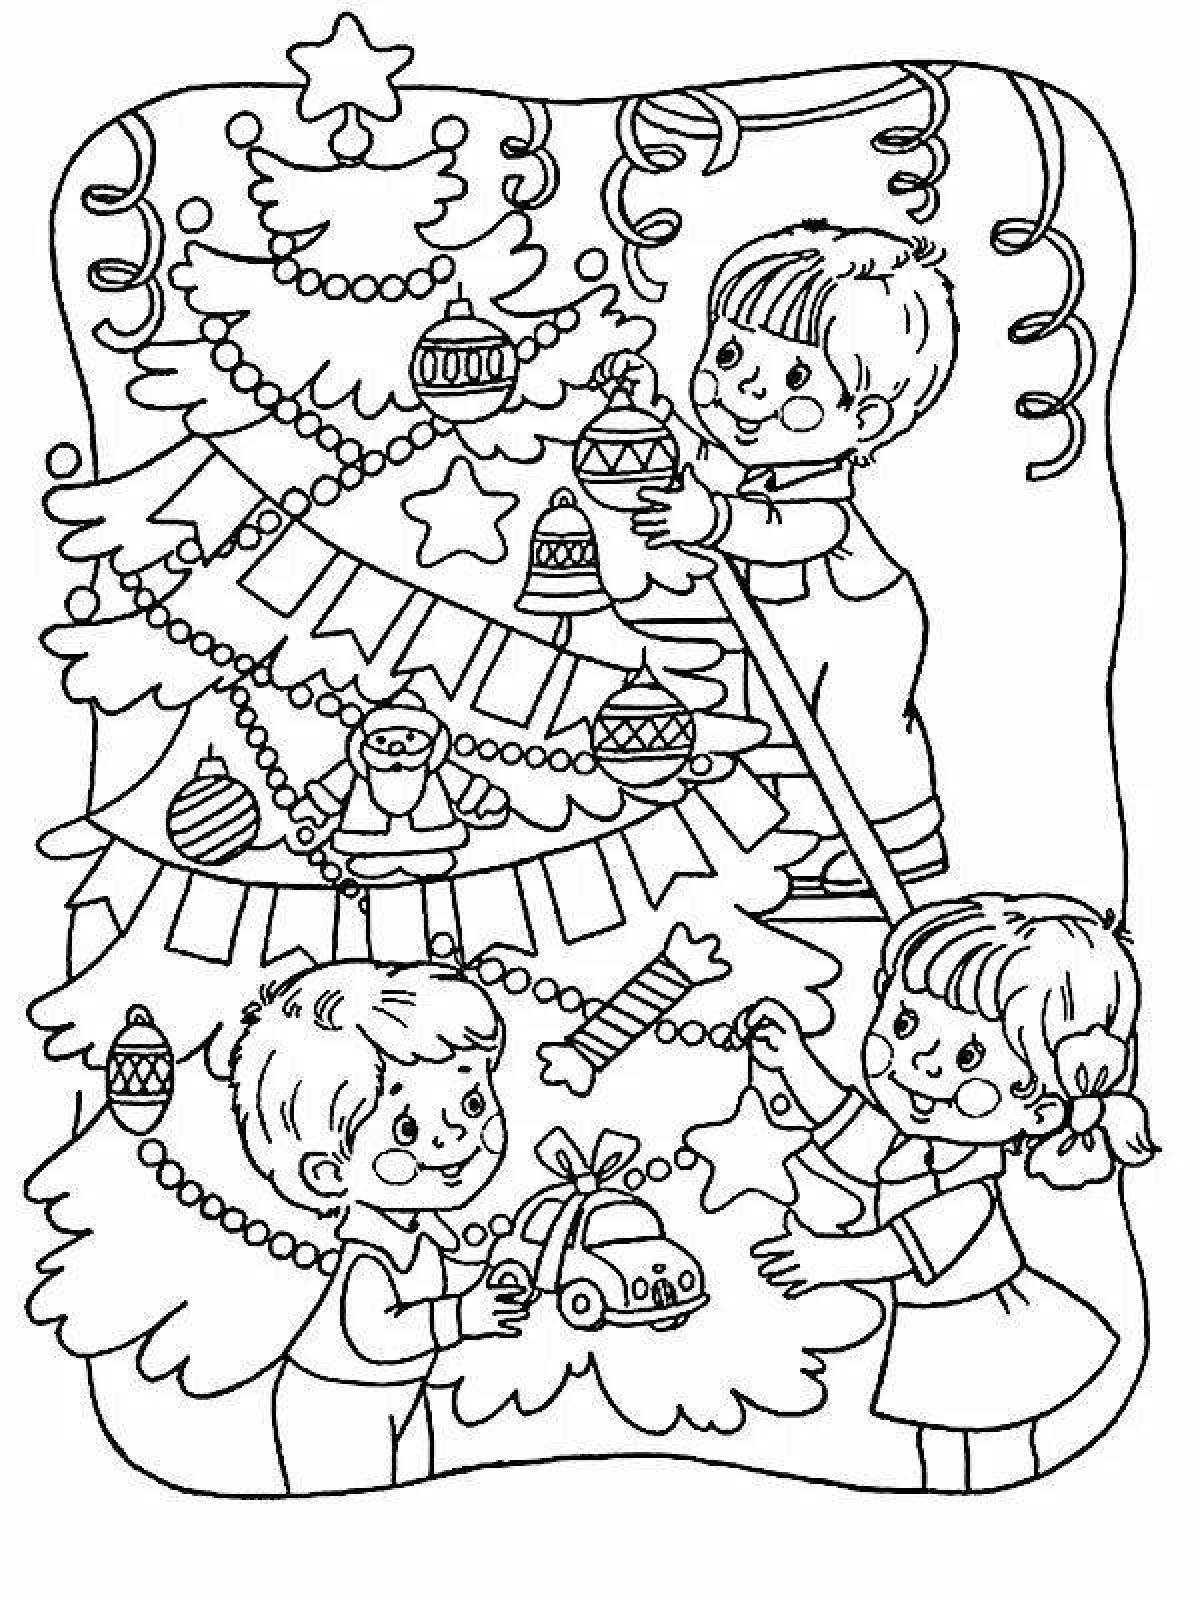 Dizzy Christmas coloring book